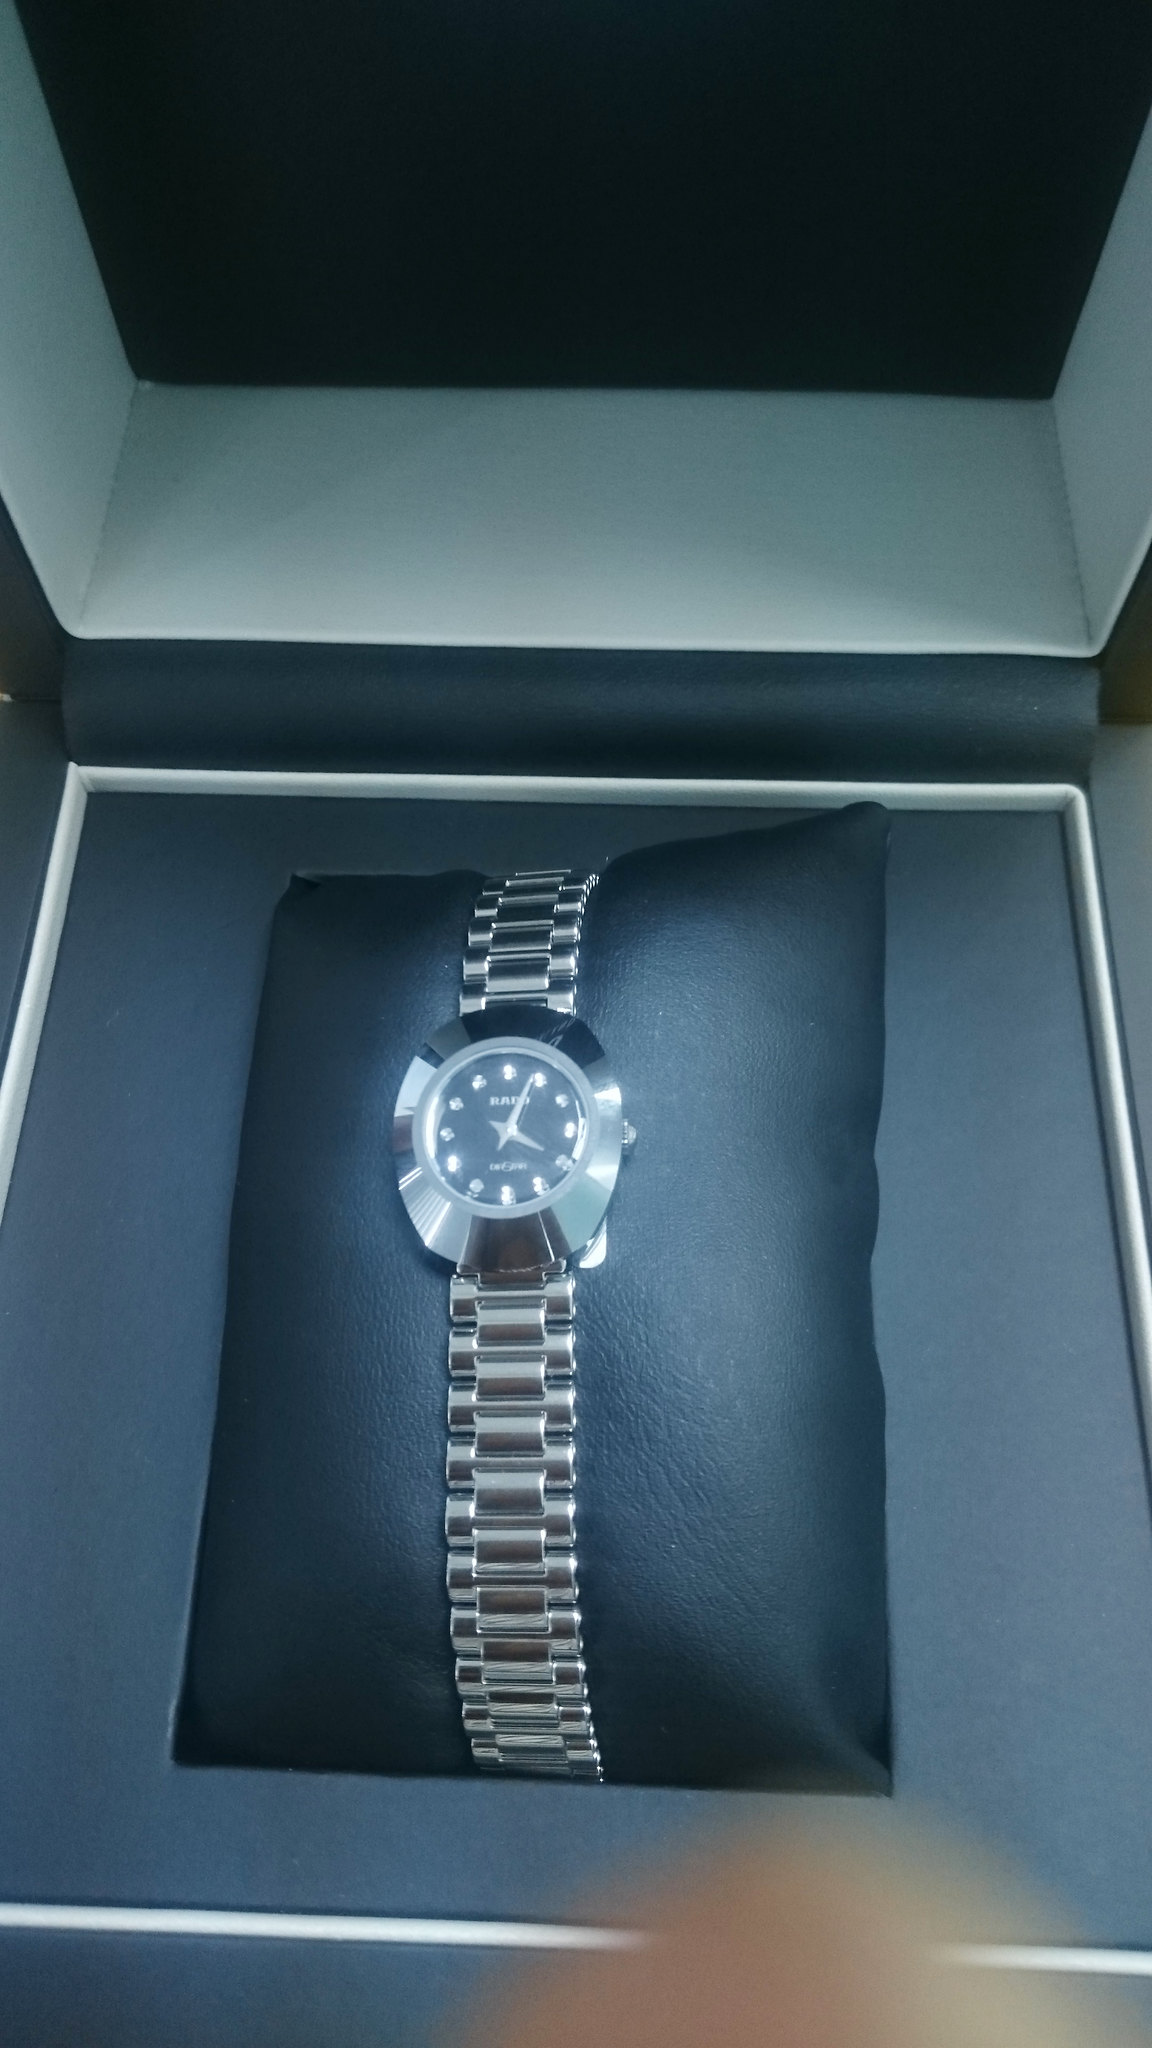 Bán đồng hồ Rado Diastar Original Watch cho nữ - 4